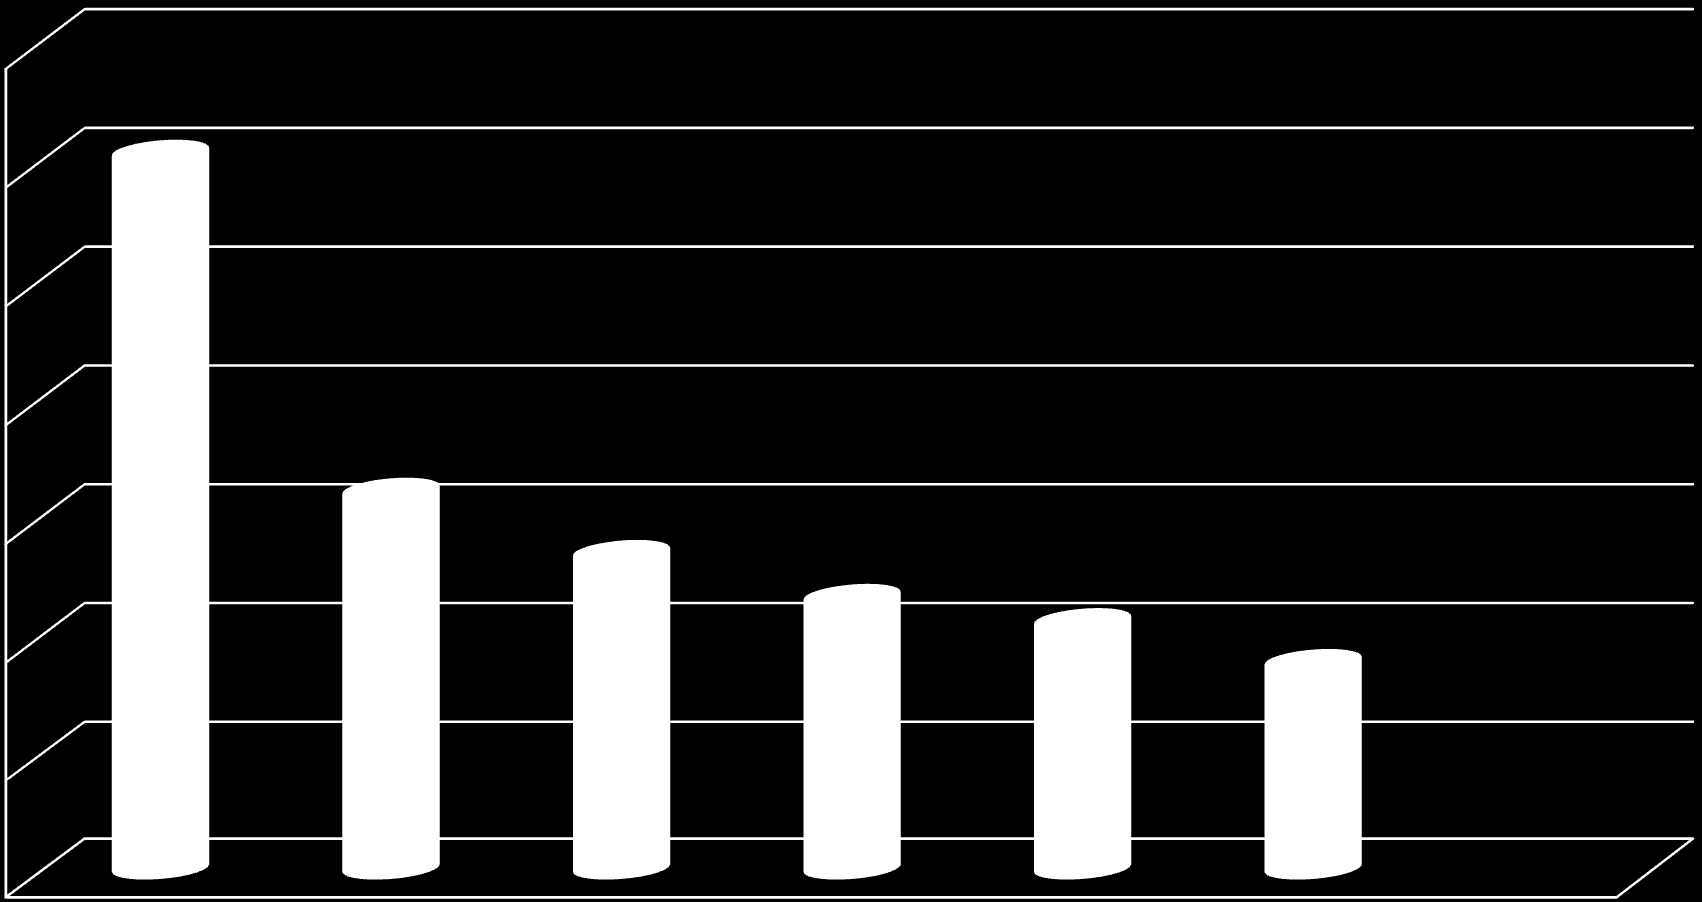 Antall sysselsatte etter arbeidsssted, Nord-Gudbrandsdalen (2013) 3500 3026 3000